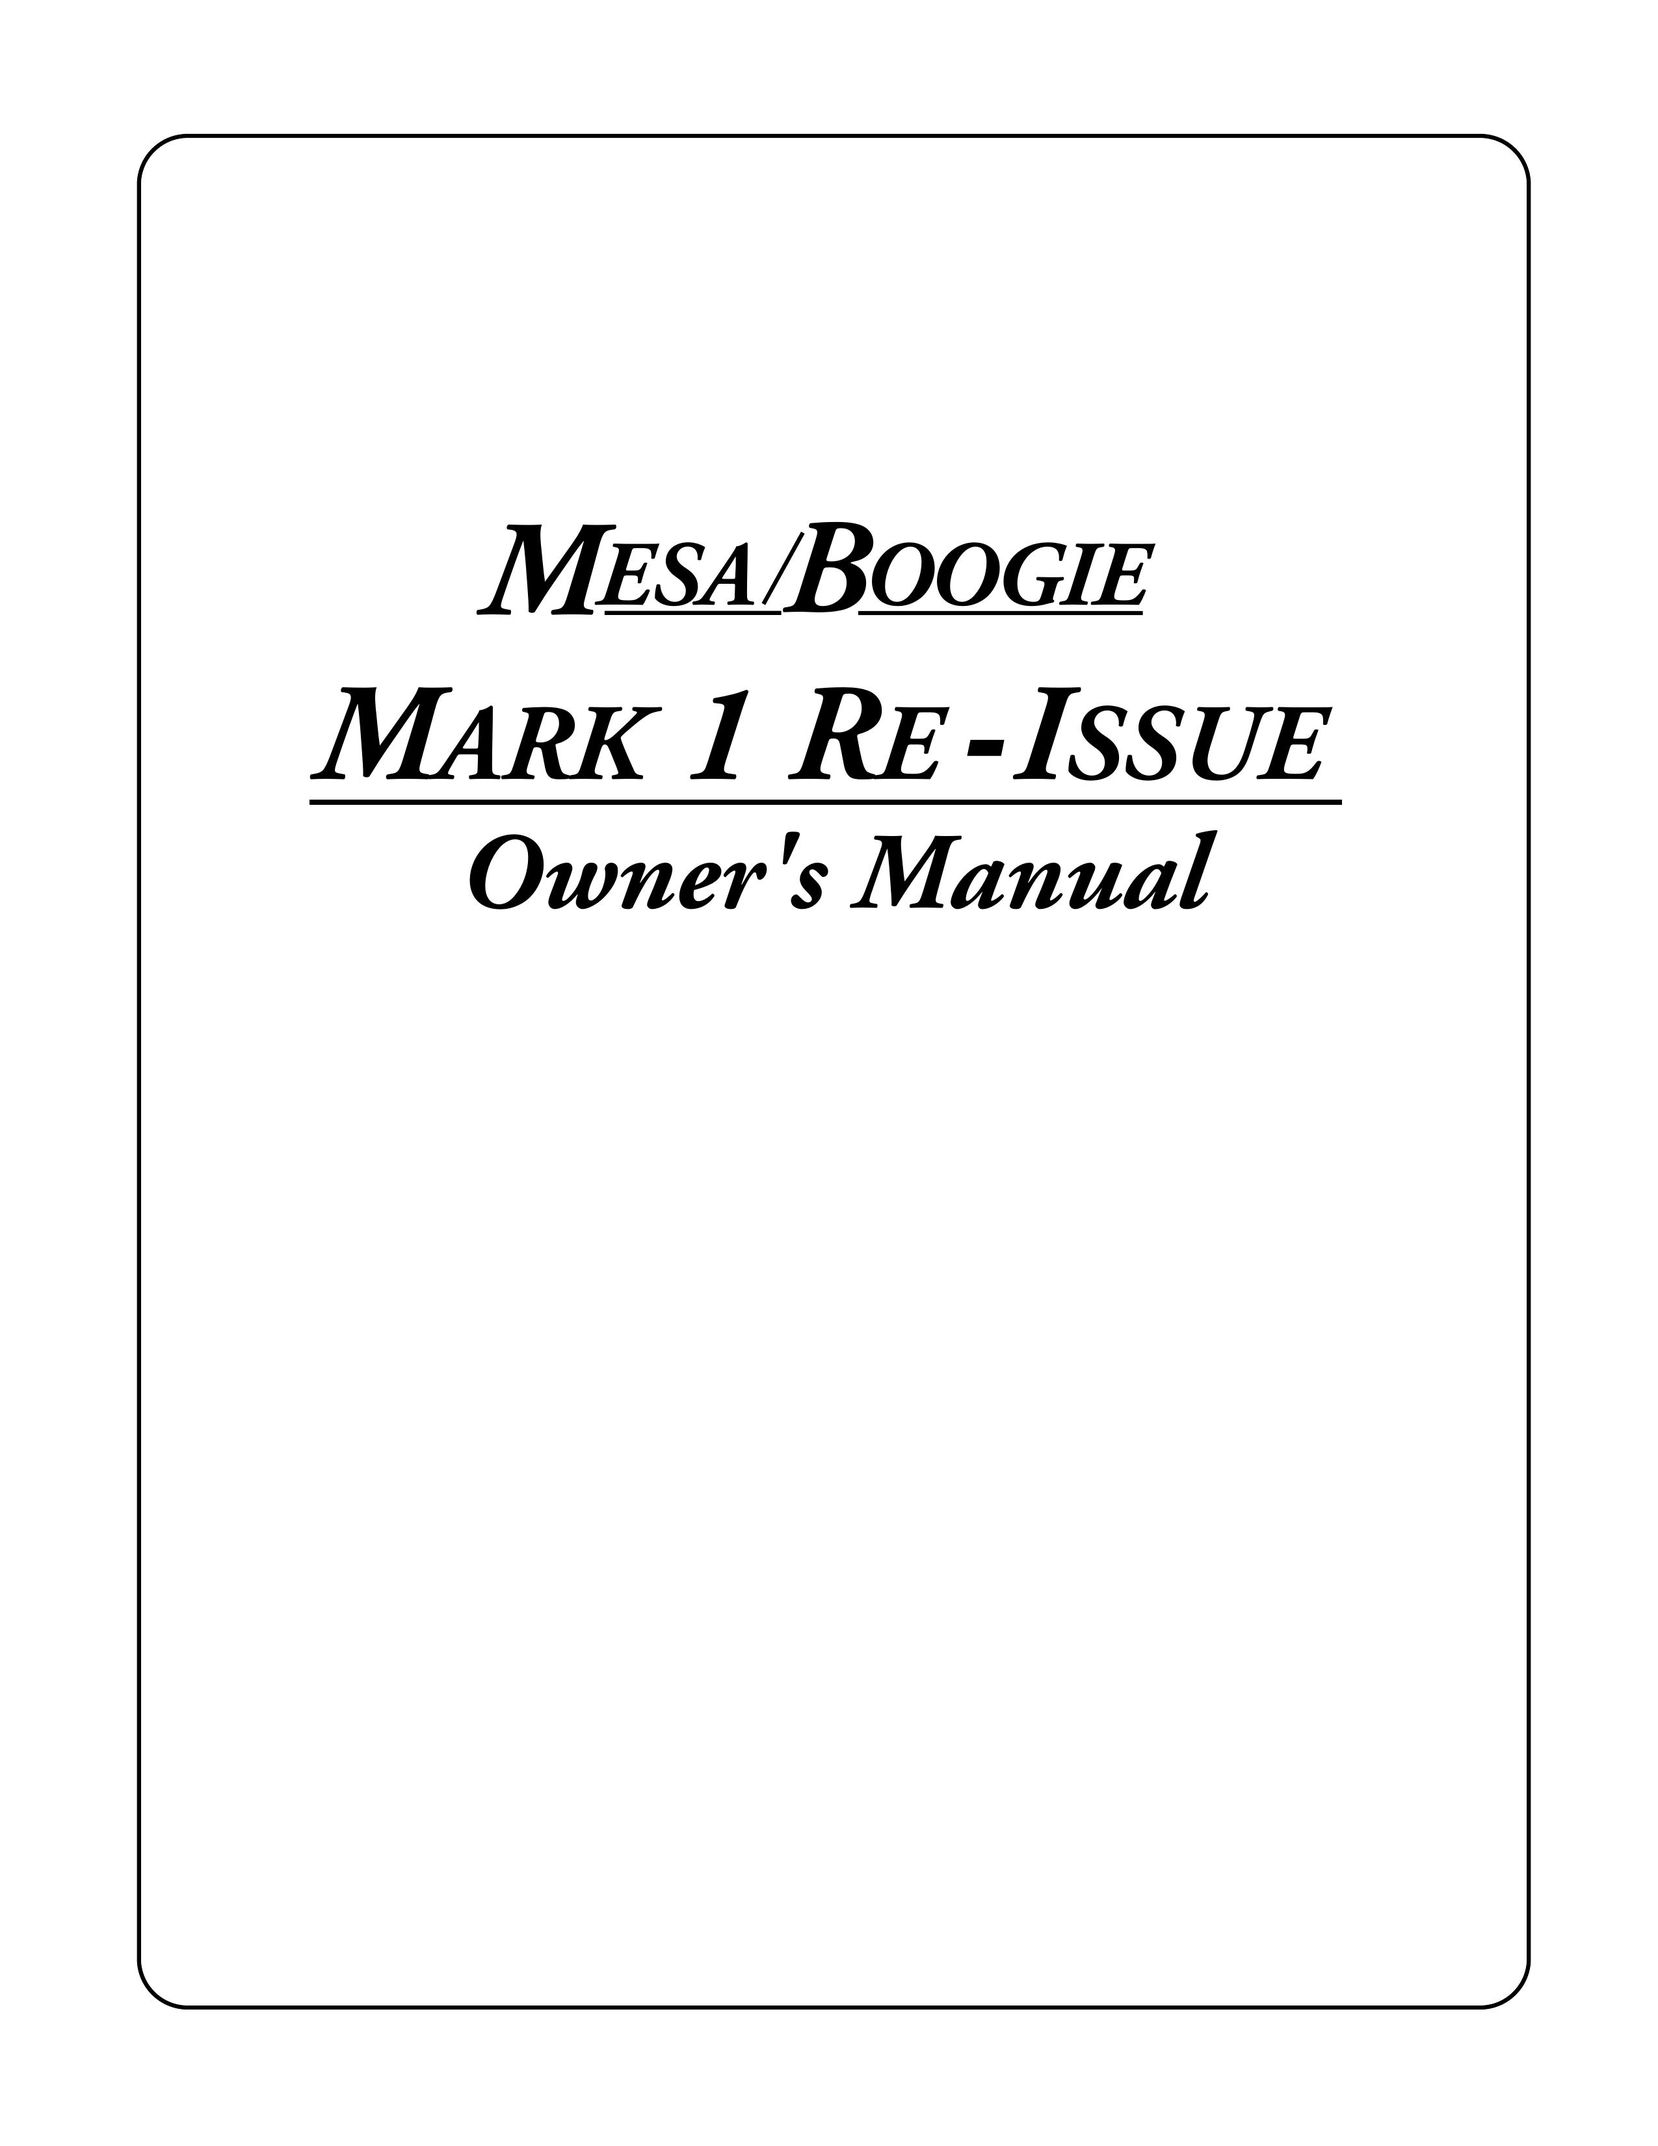 Mesa/Boogie MARK 1 Stereo Amplifier User Manual